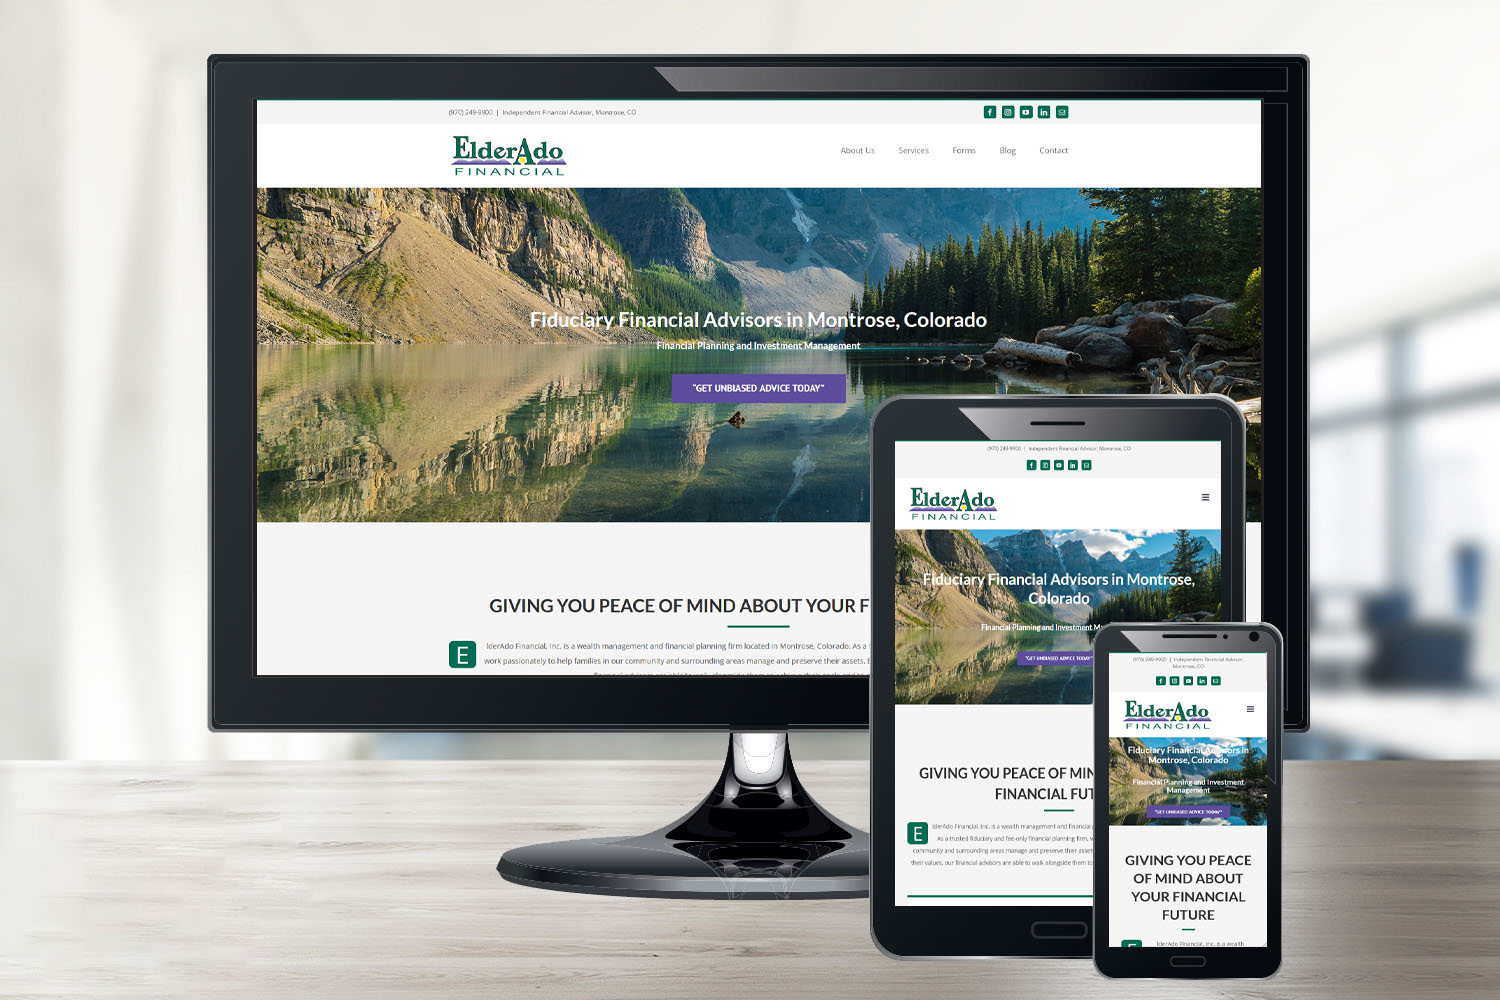 ElderAdo Financial's website shown on responsive platforms